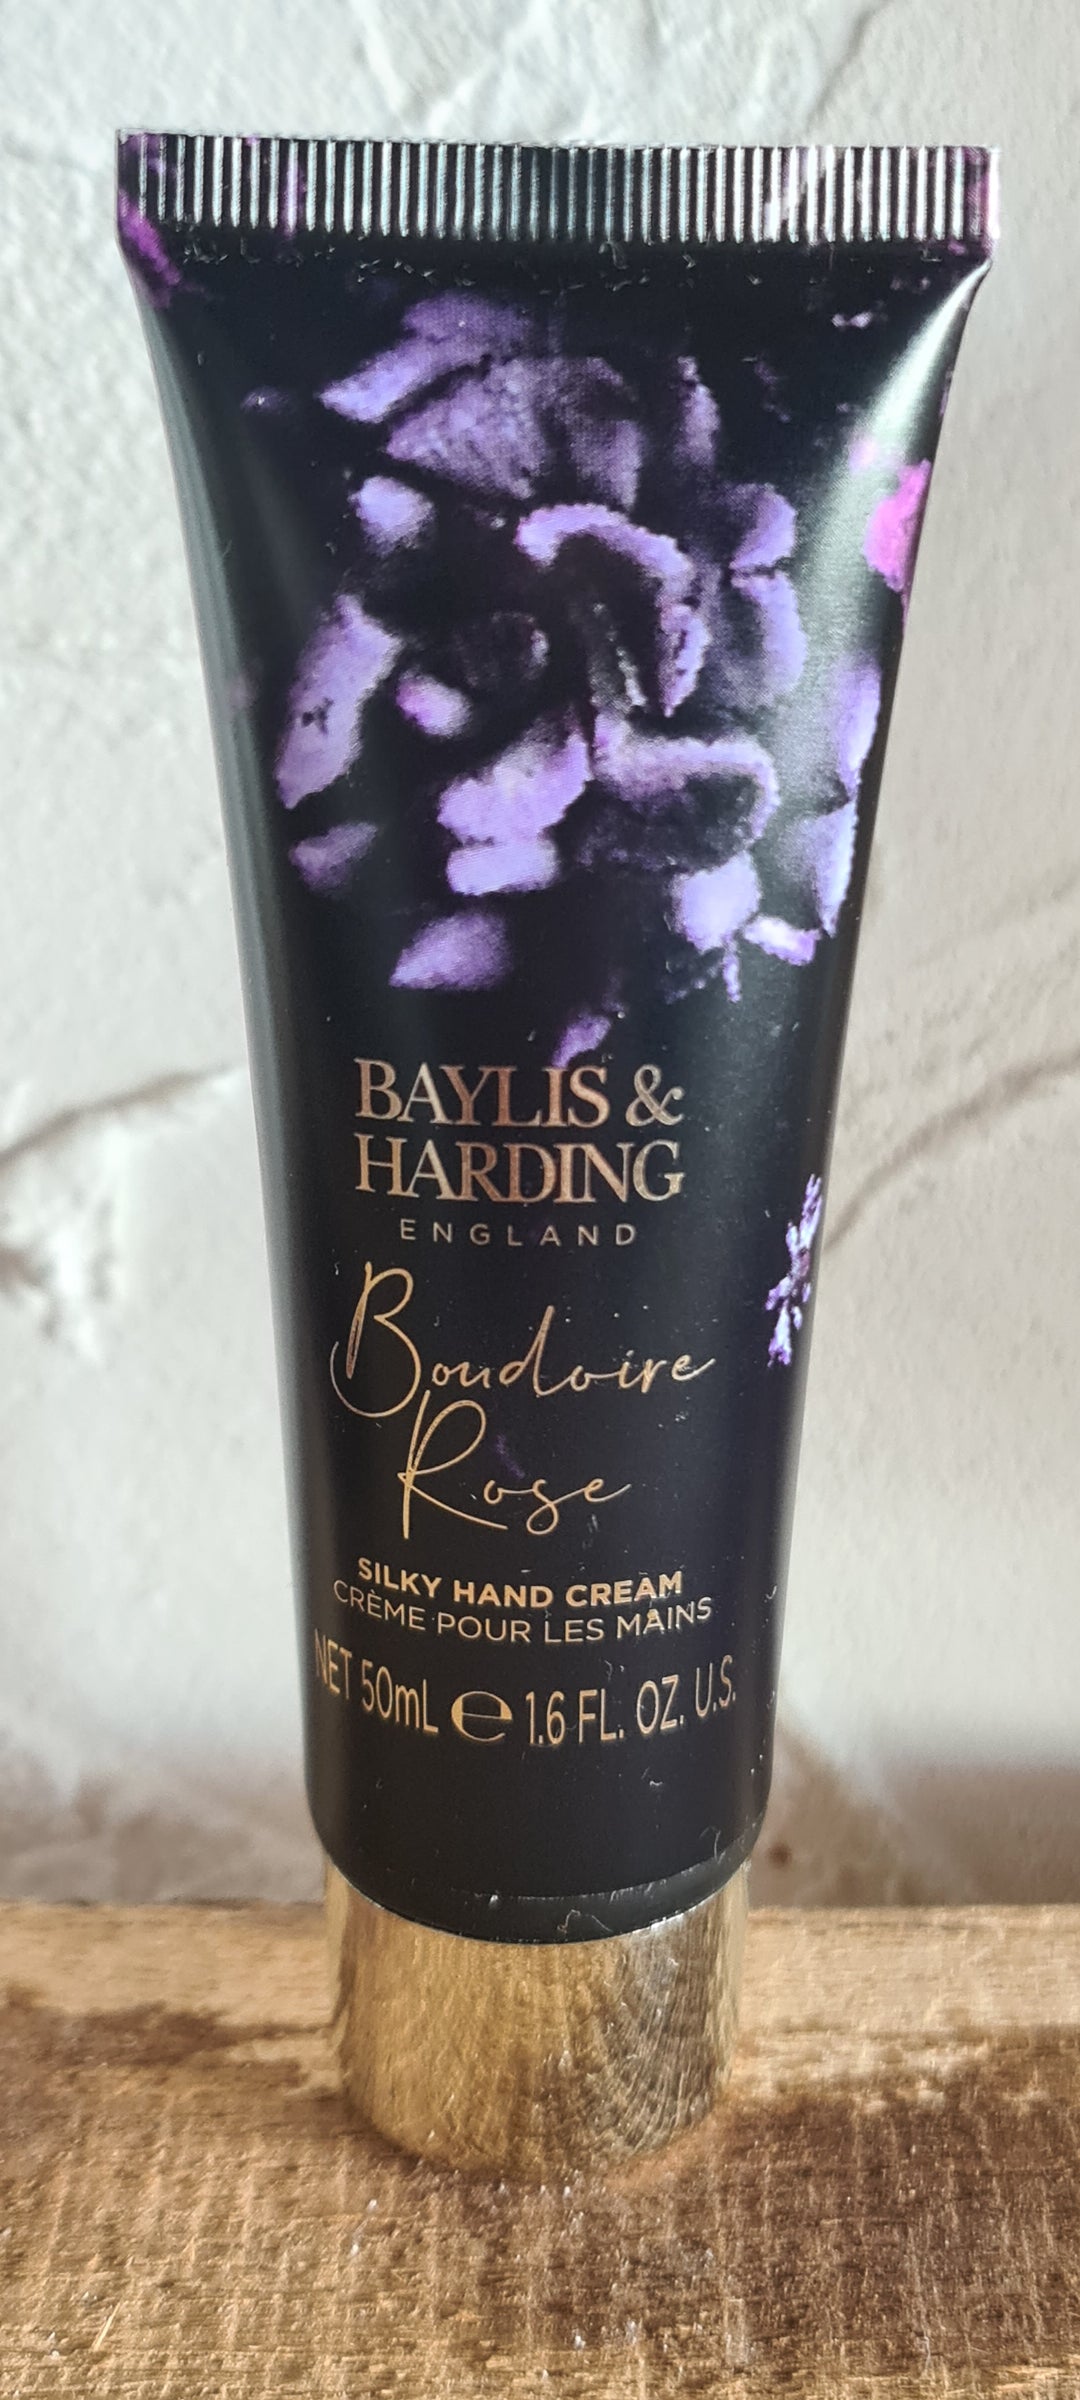 Baylis & Harding "Boudoire Collection" Handcreme mit Rosenduft , 50 ml , Motiv 2 - British Moments / Fernweh-Kaufhaus